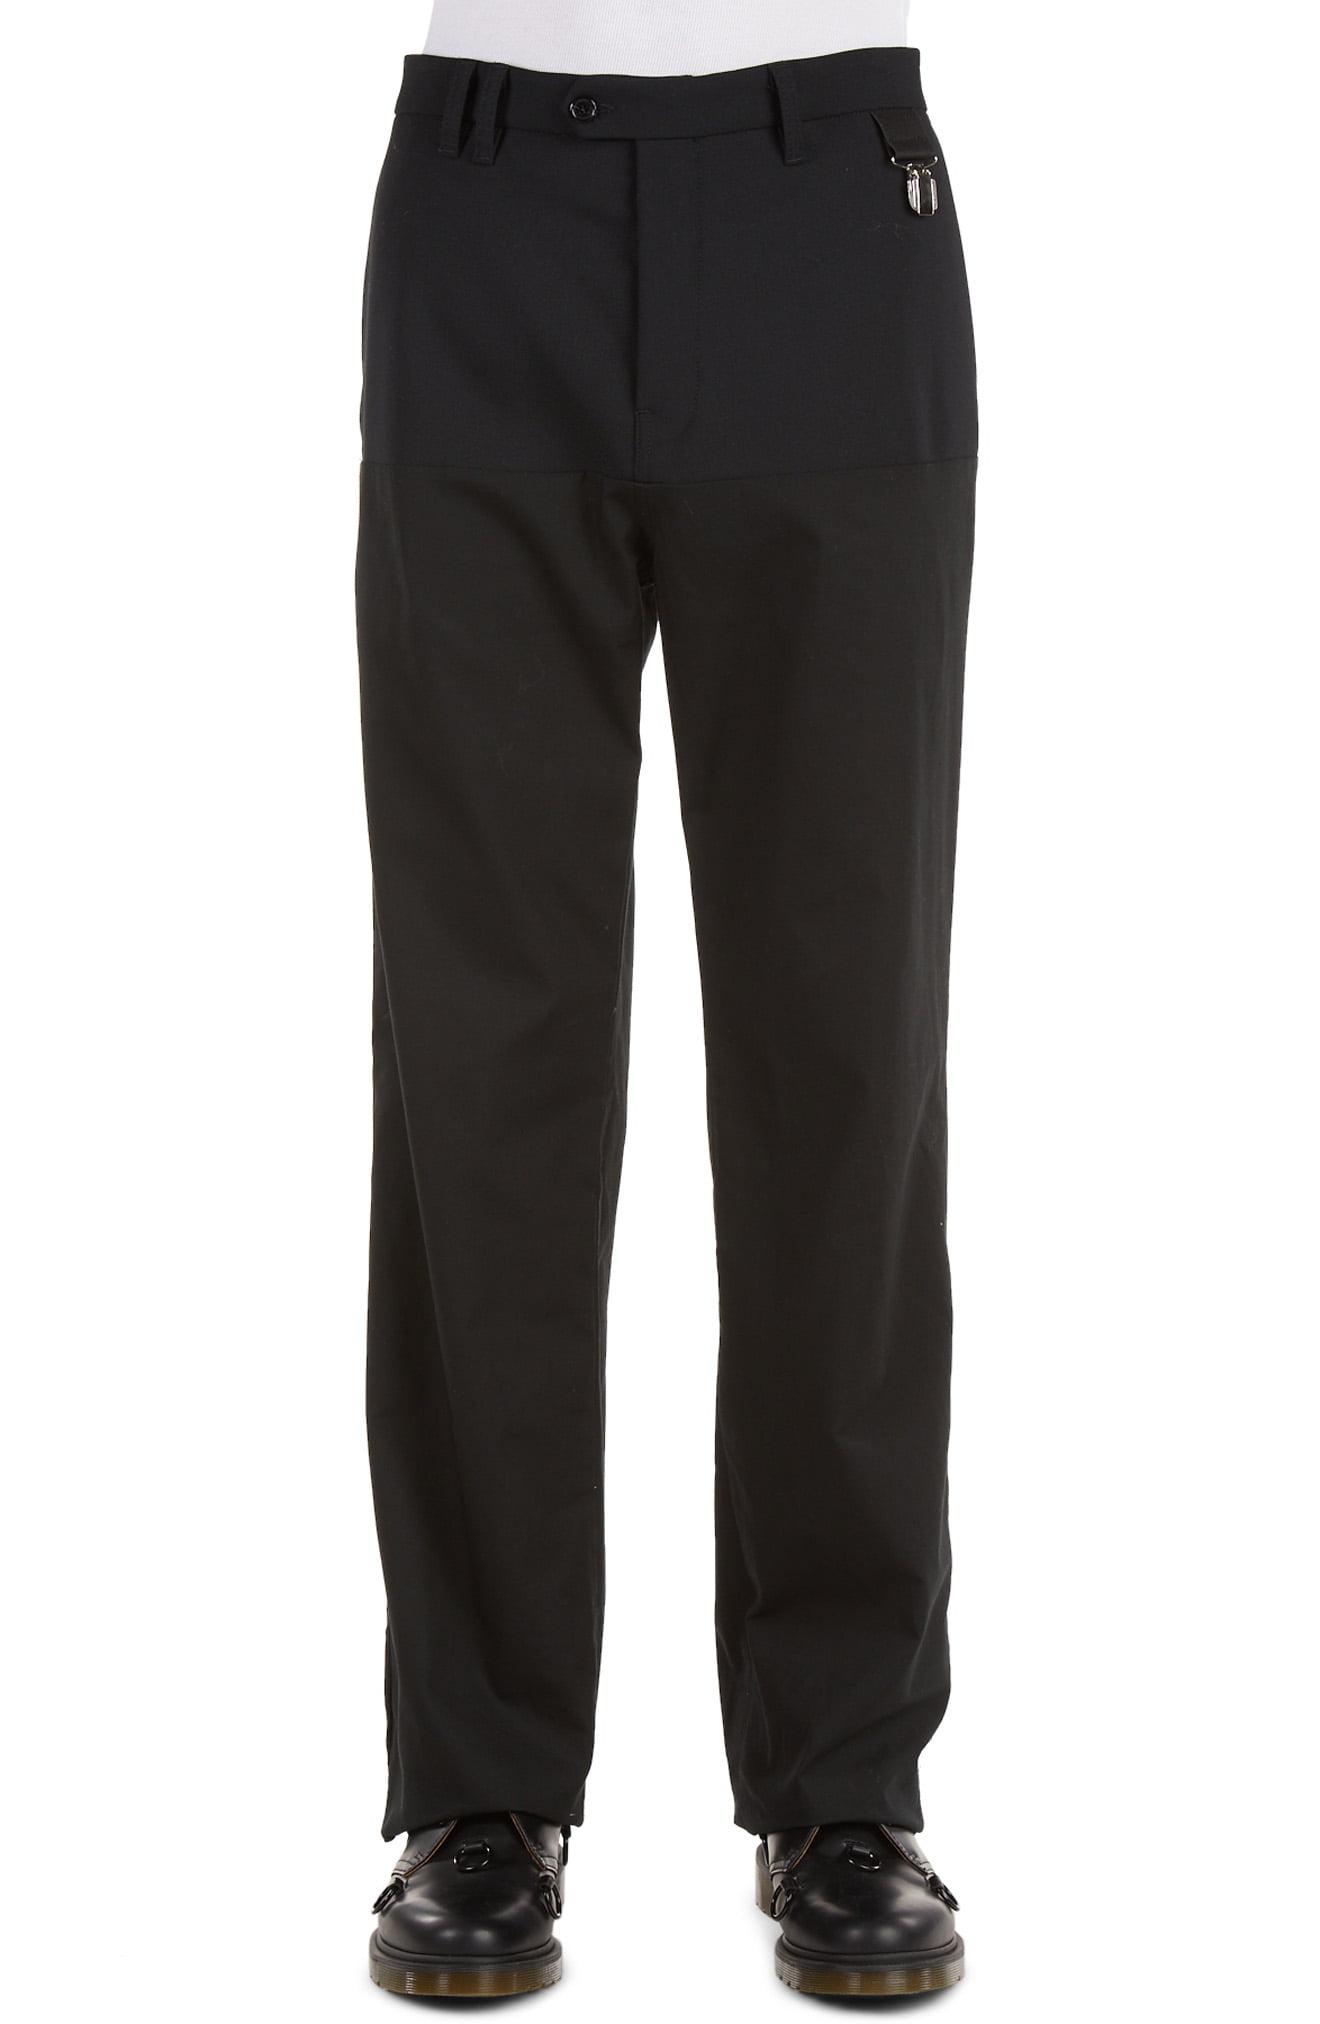 Raf Simons Horizontal Panel Wool Blend Pants in Black for Men - Lyst